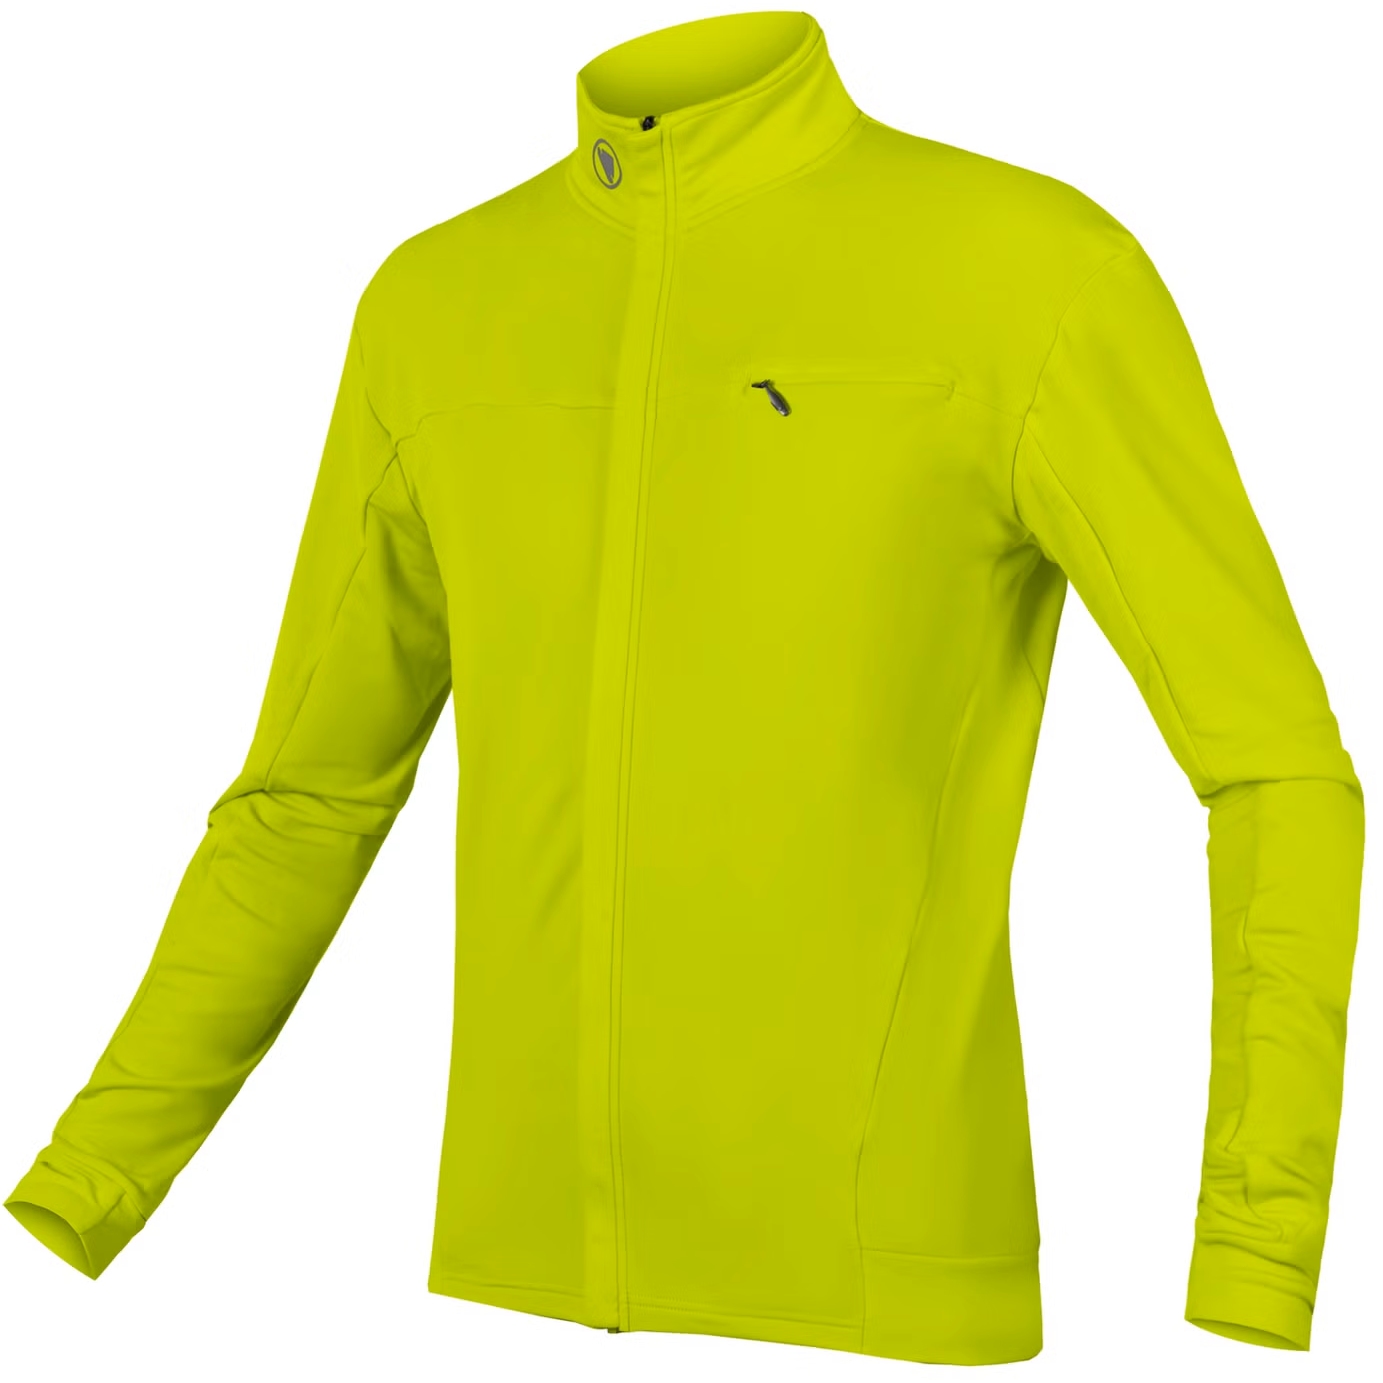 Produktbild von Endura Xtract Roubaix Jacke Herren - neon-gelb